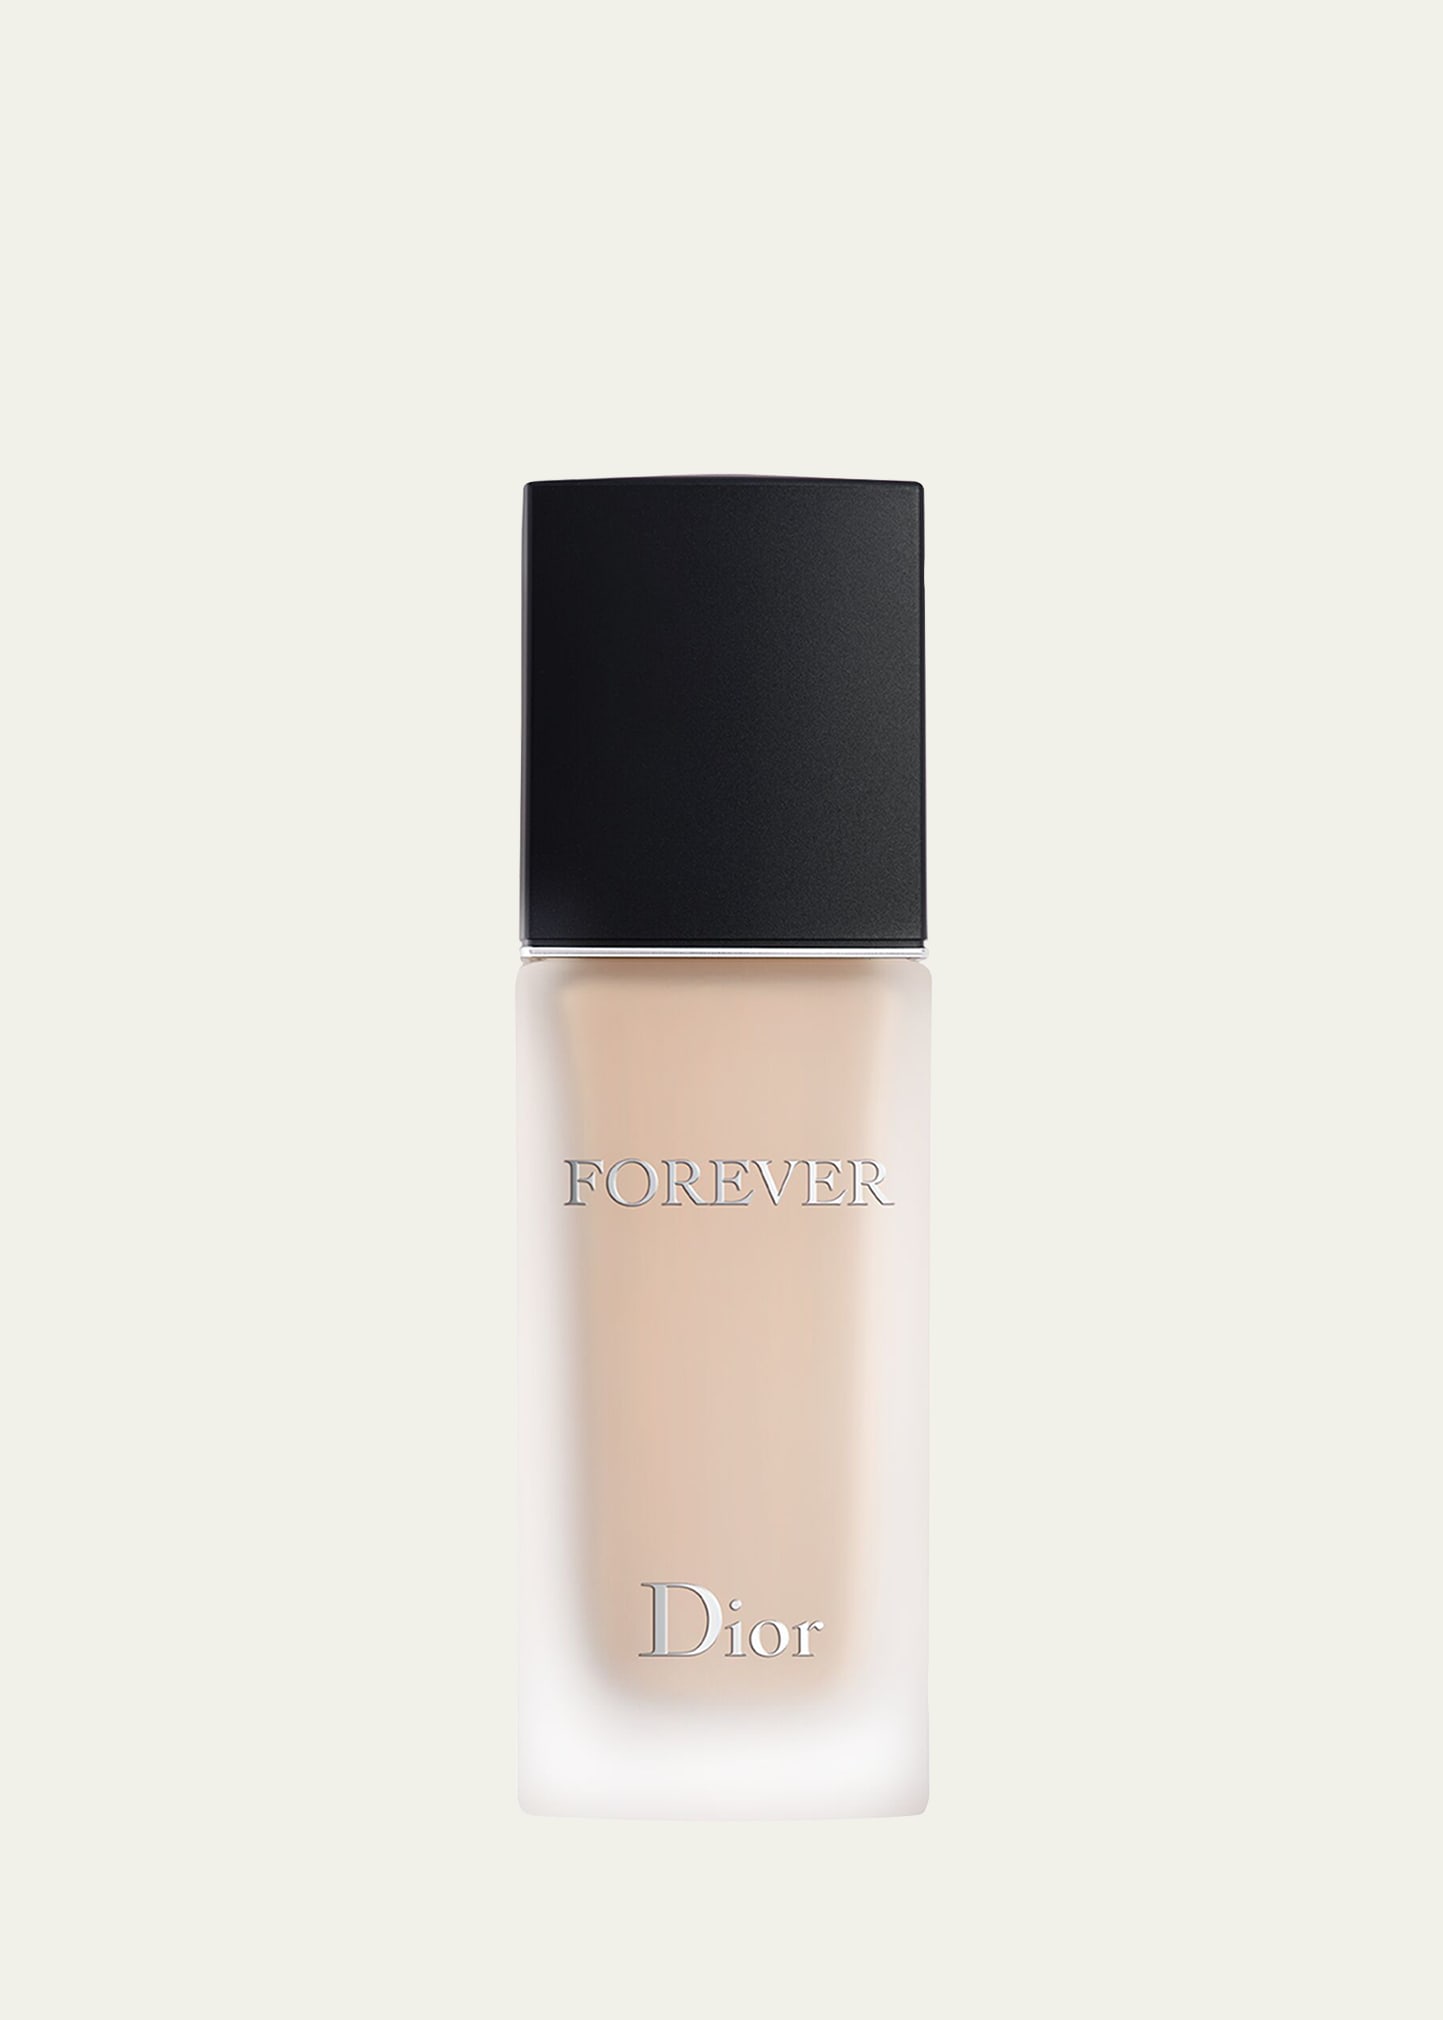 Dior 1 Oz. Forever Matte Skincare Foundation Spf 15 In 0 Neutral